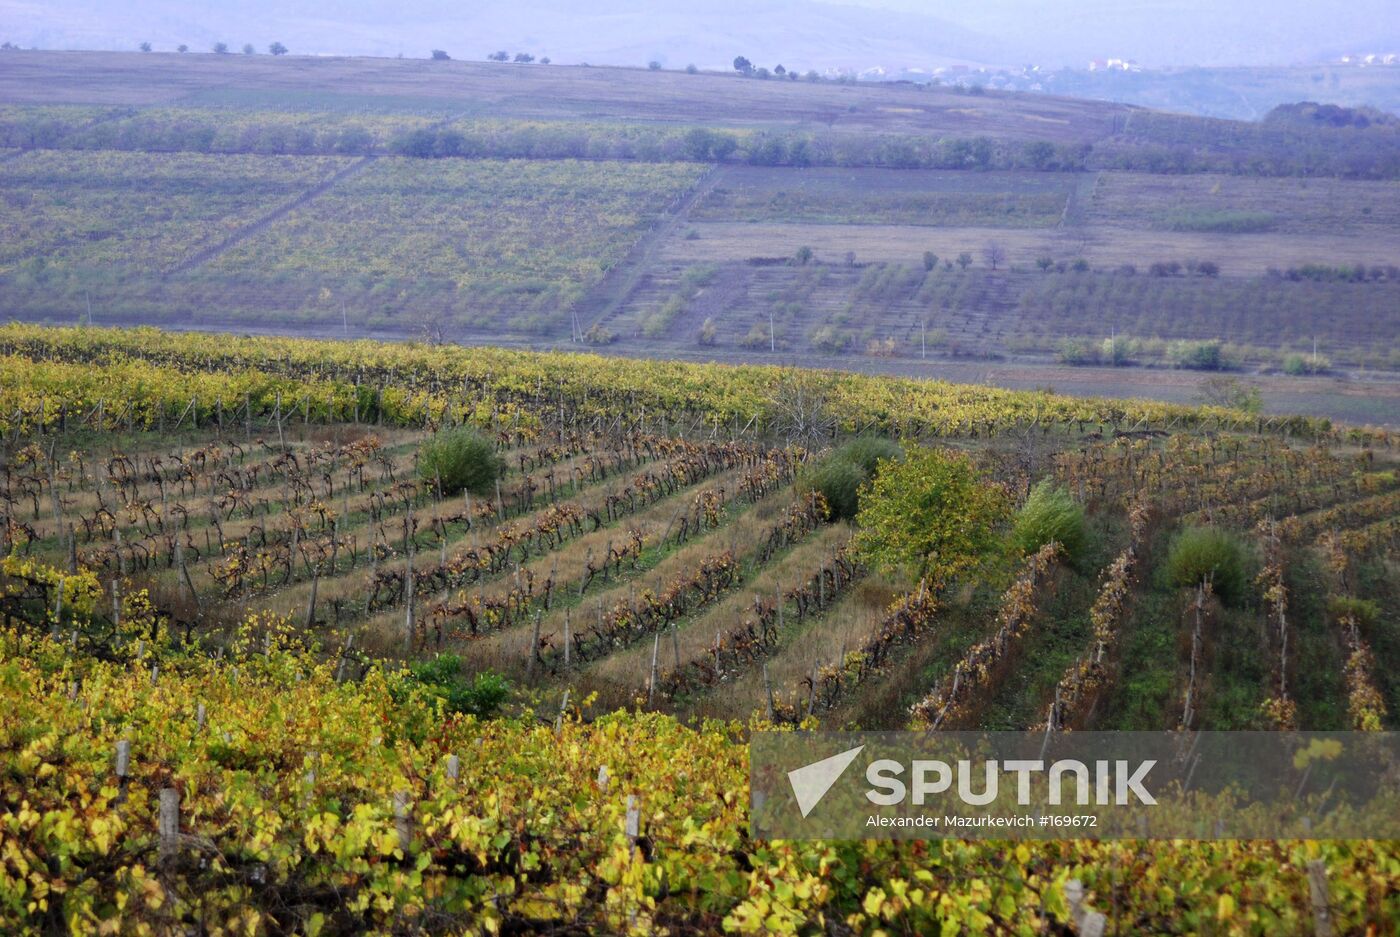 Moldavian vineland